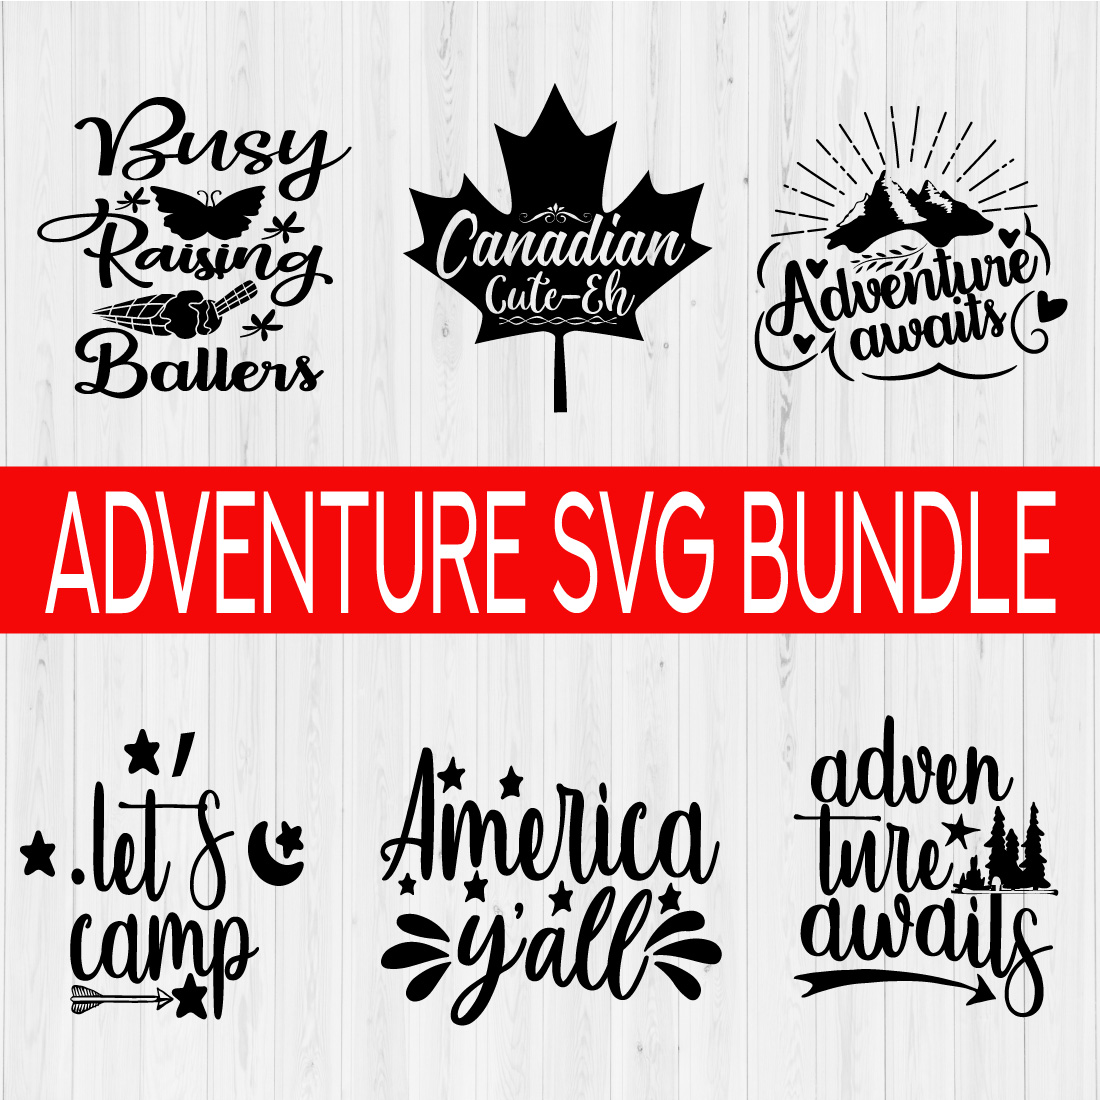 Adventure Svg Bundle Vol8 cover image.